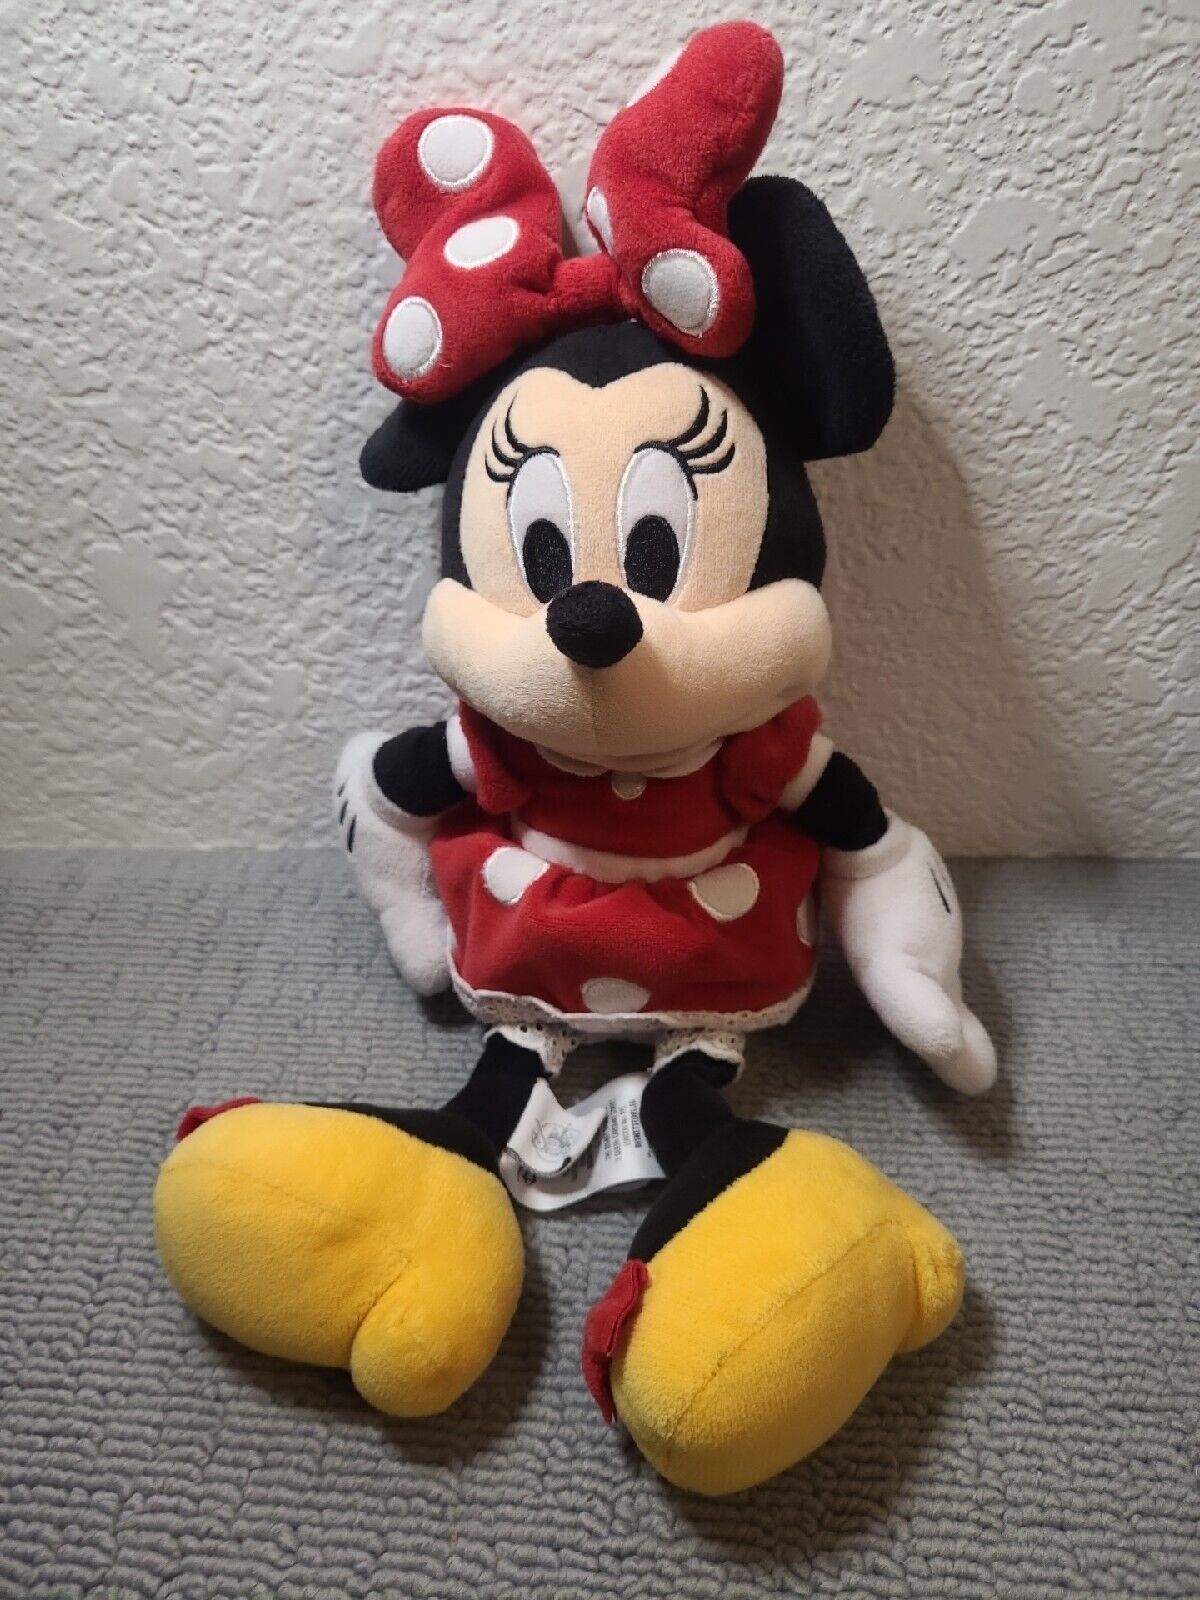 Disney Store Minnie Mouse Red Dress Mini Bean Bag Plush